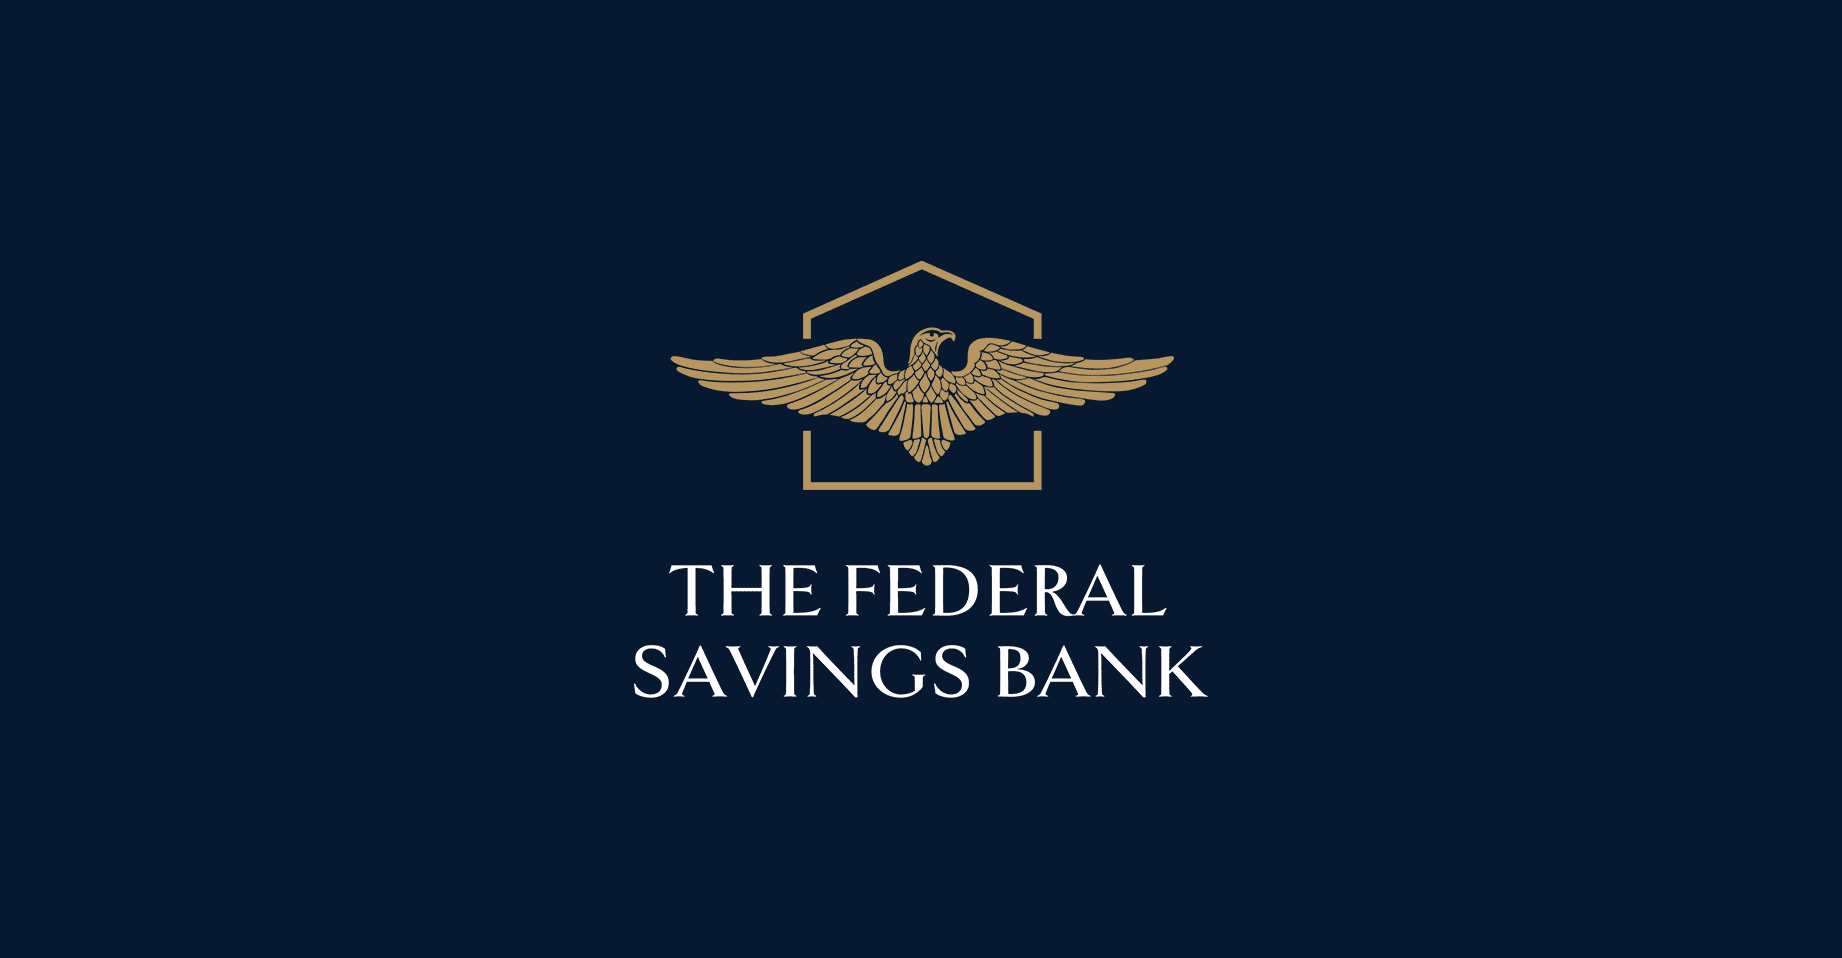 The Federal Savings Bank Logo White & Gold